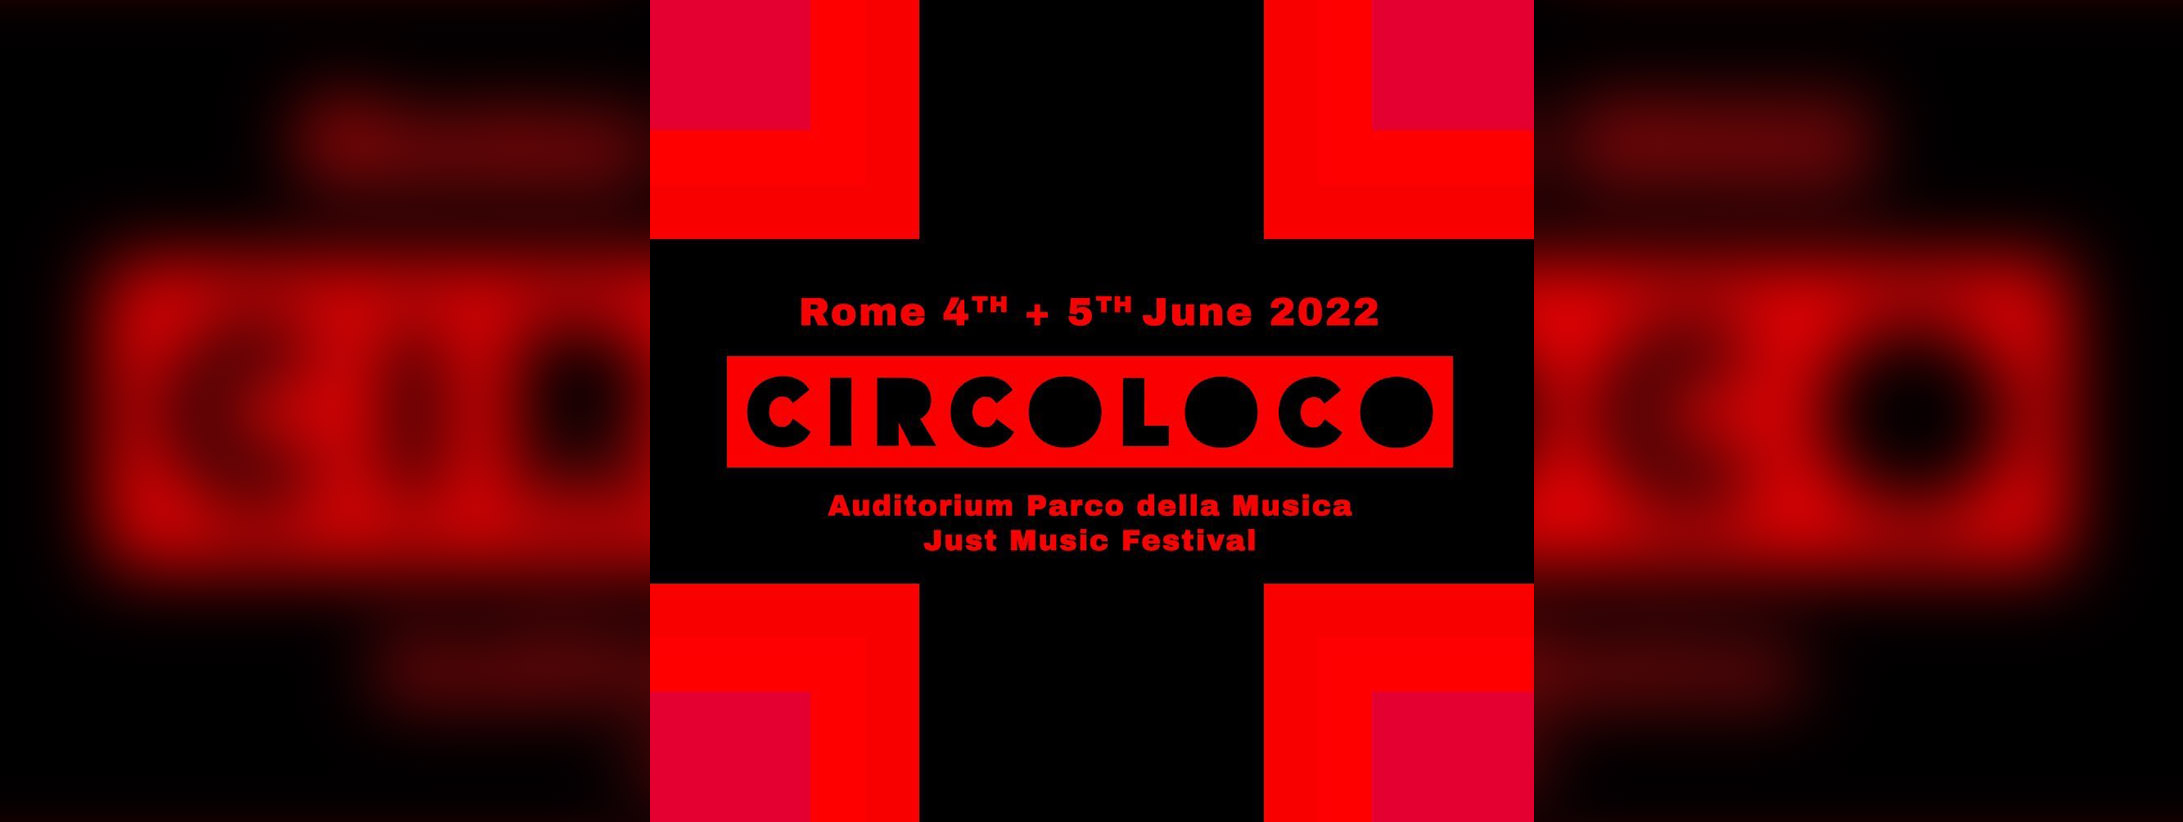 circoloco roma 4 e 5 giugno 2022